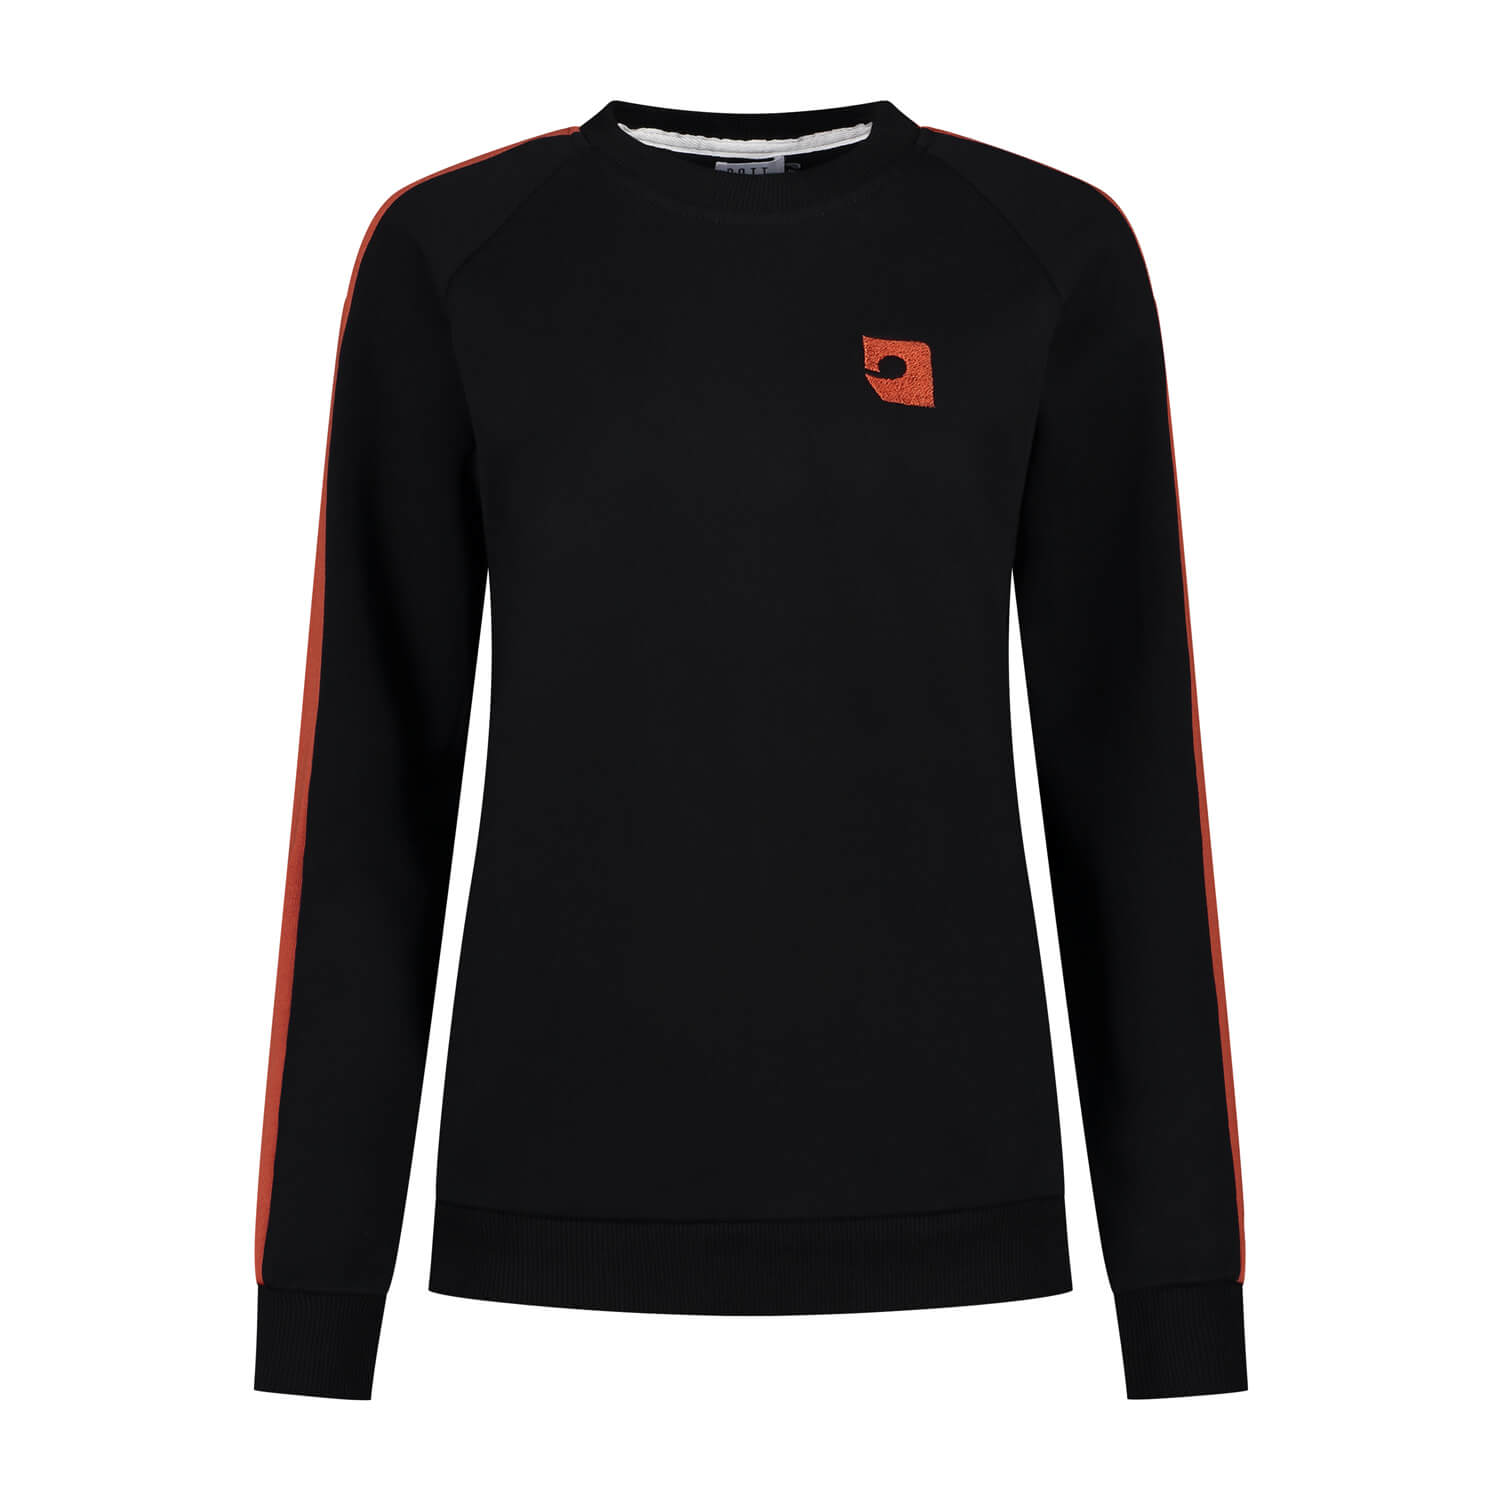 Women's organic sweatshirt - Black & Burnt Orange - Colorblock